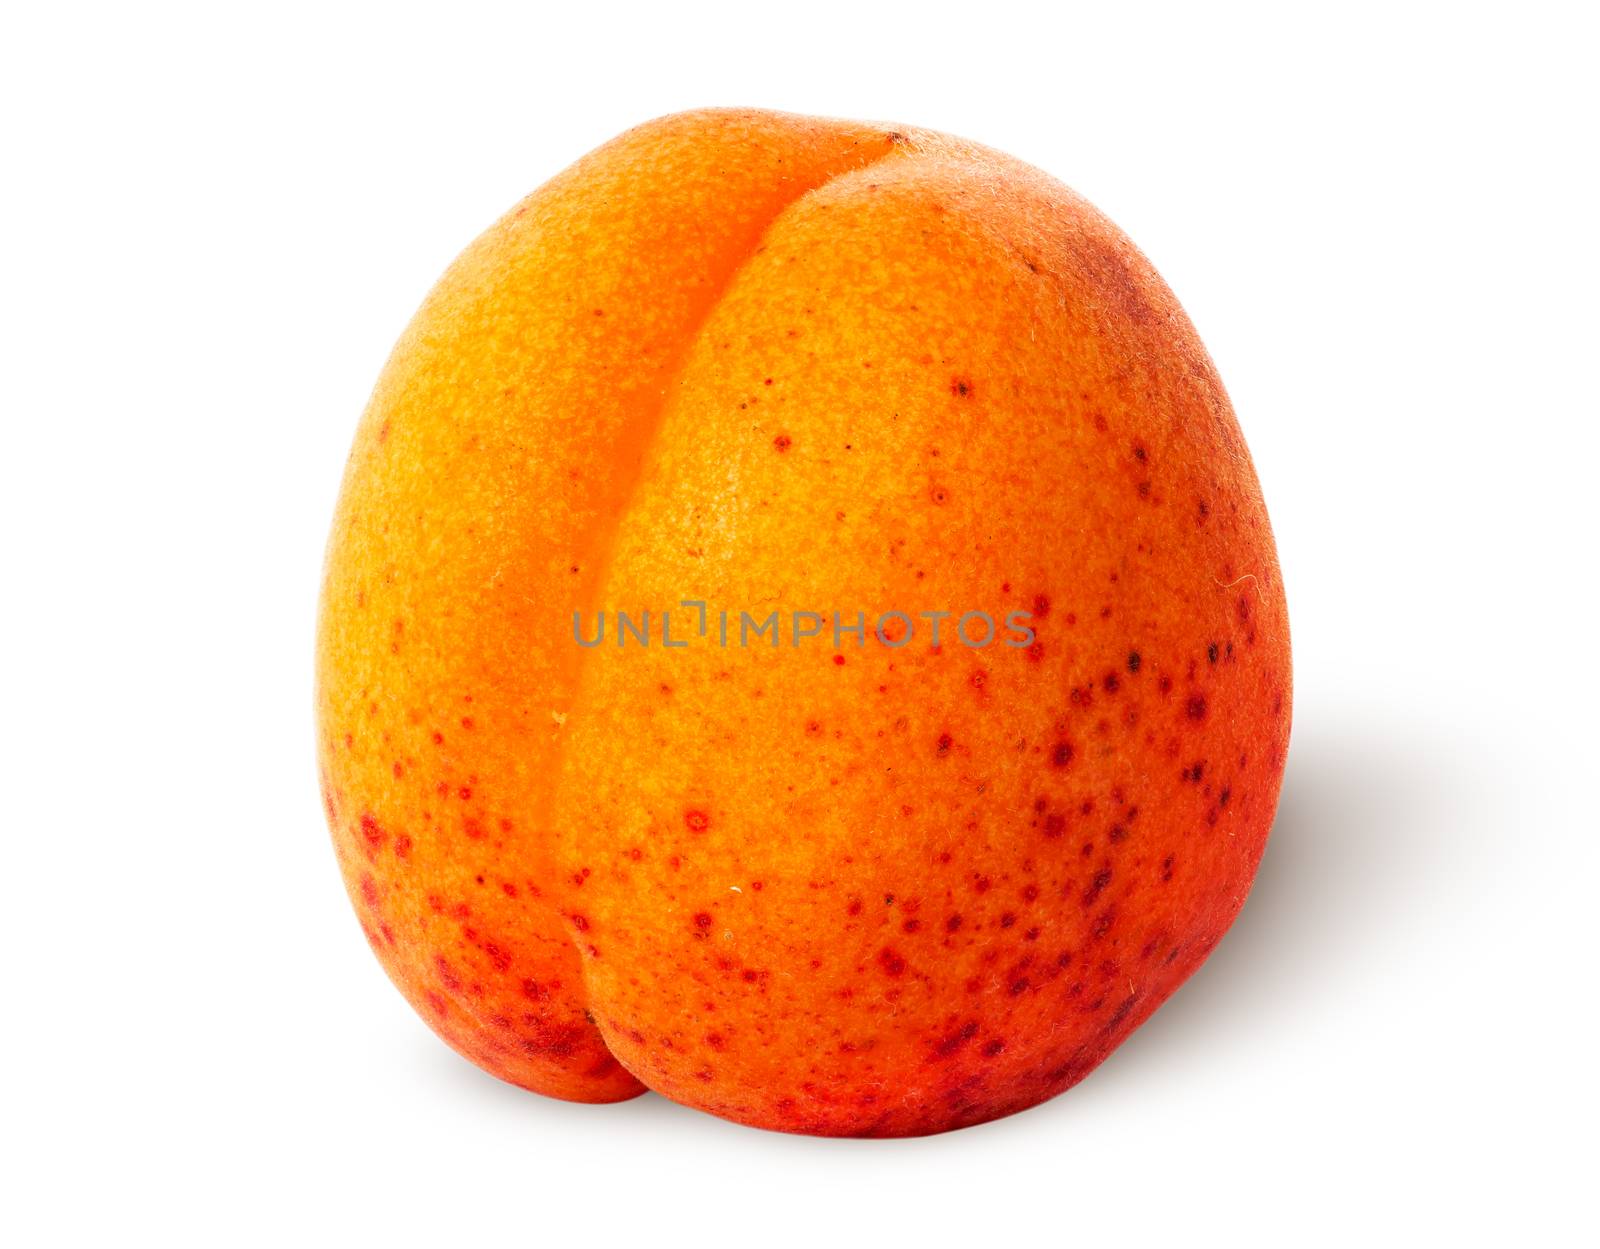 Juicy ripe apricot by Cipariss